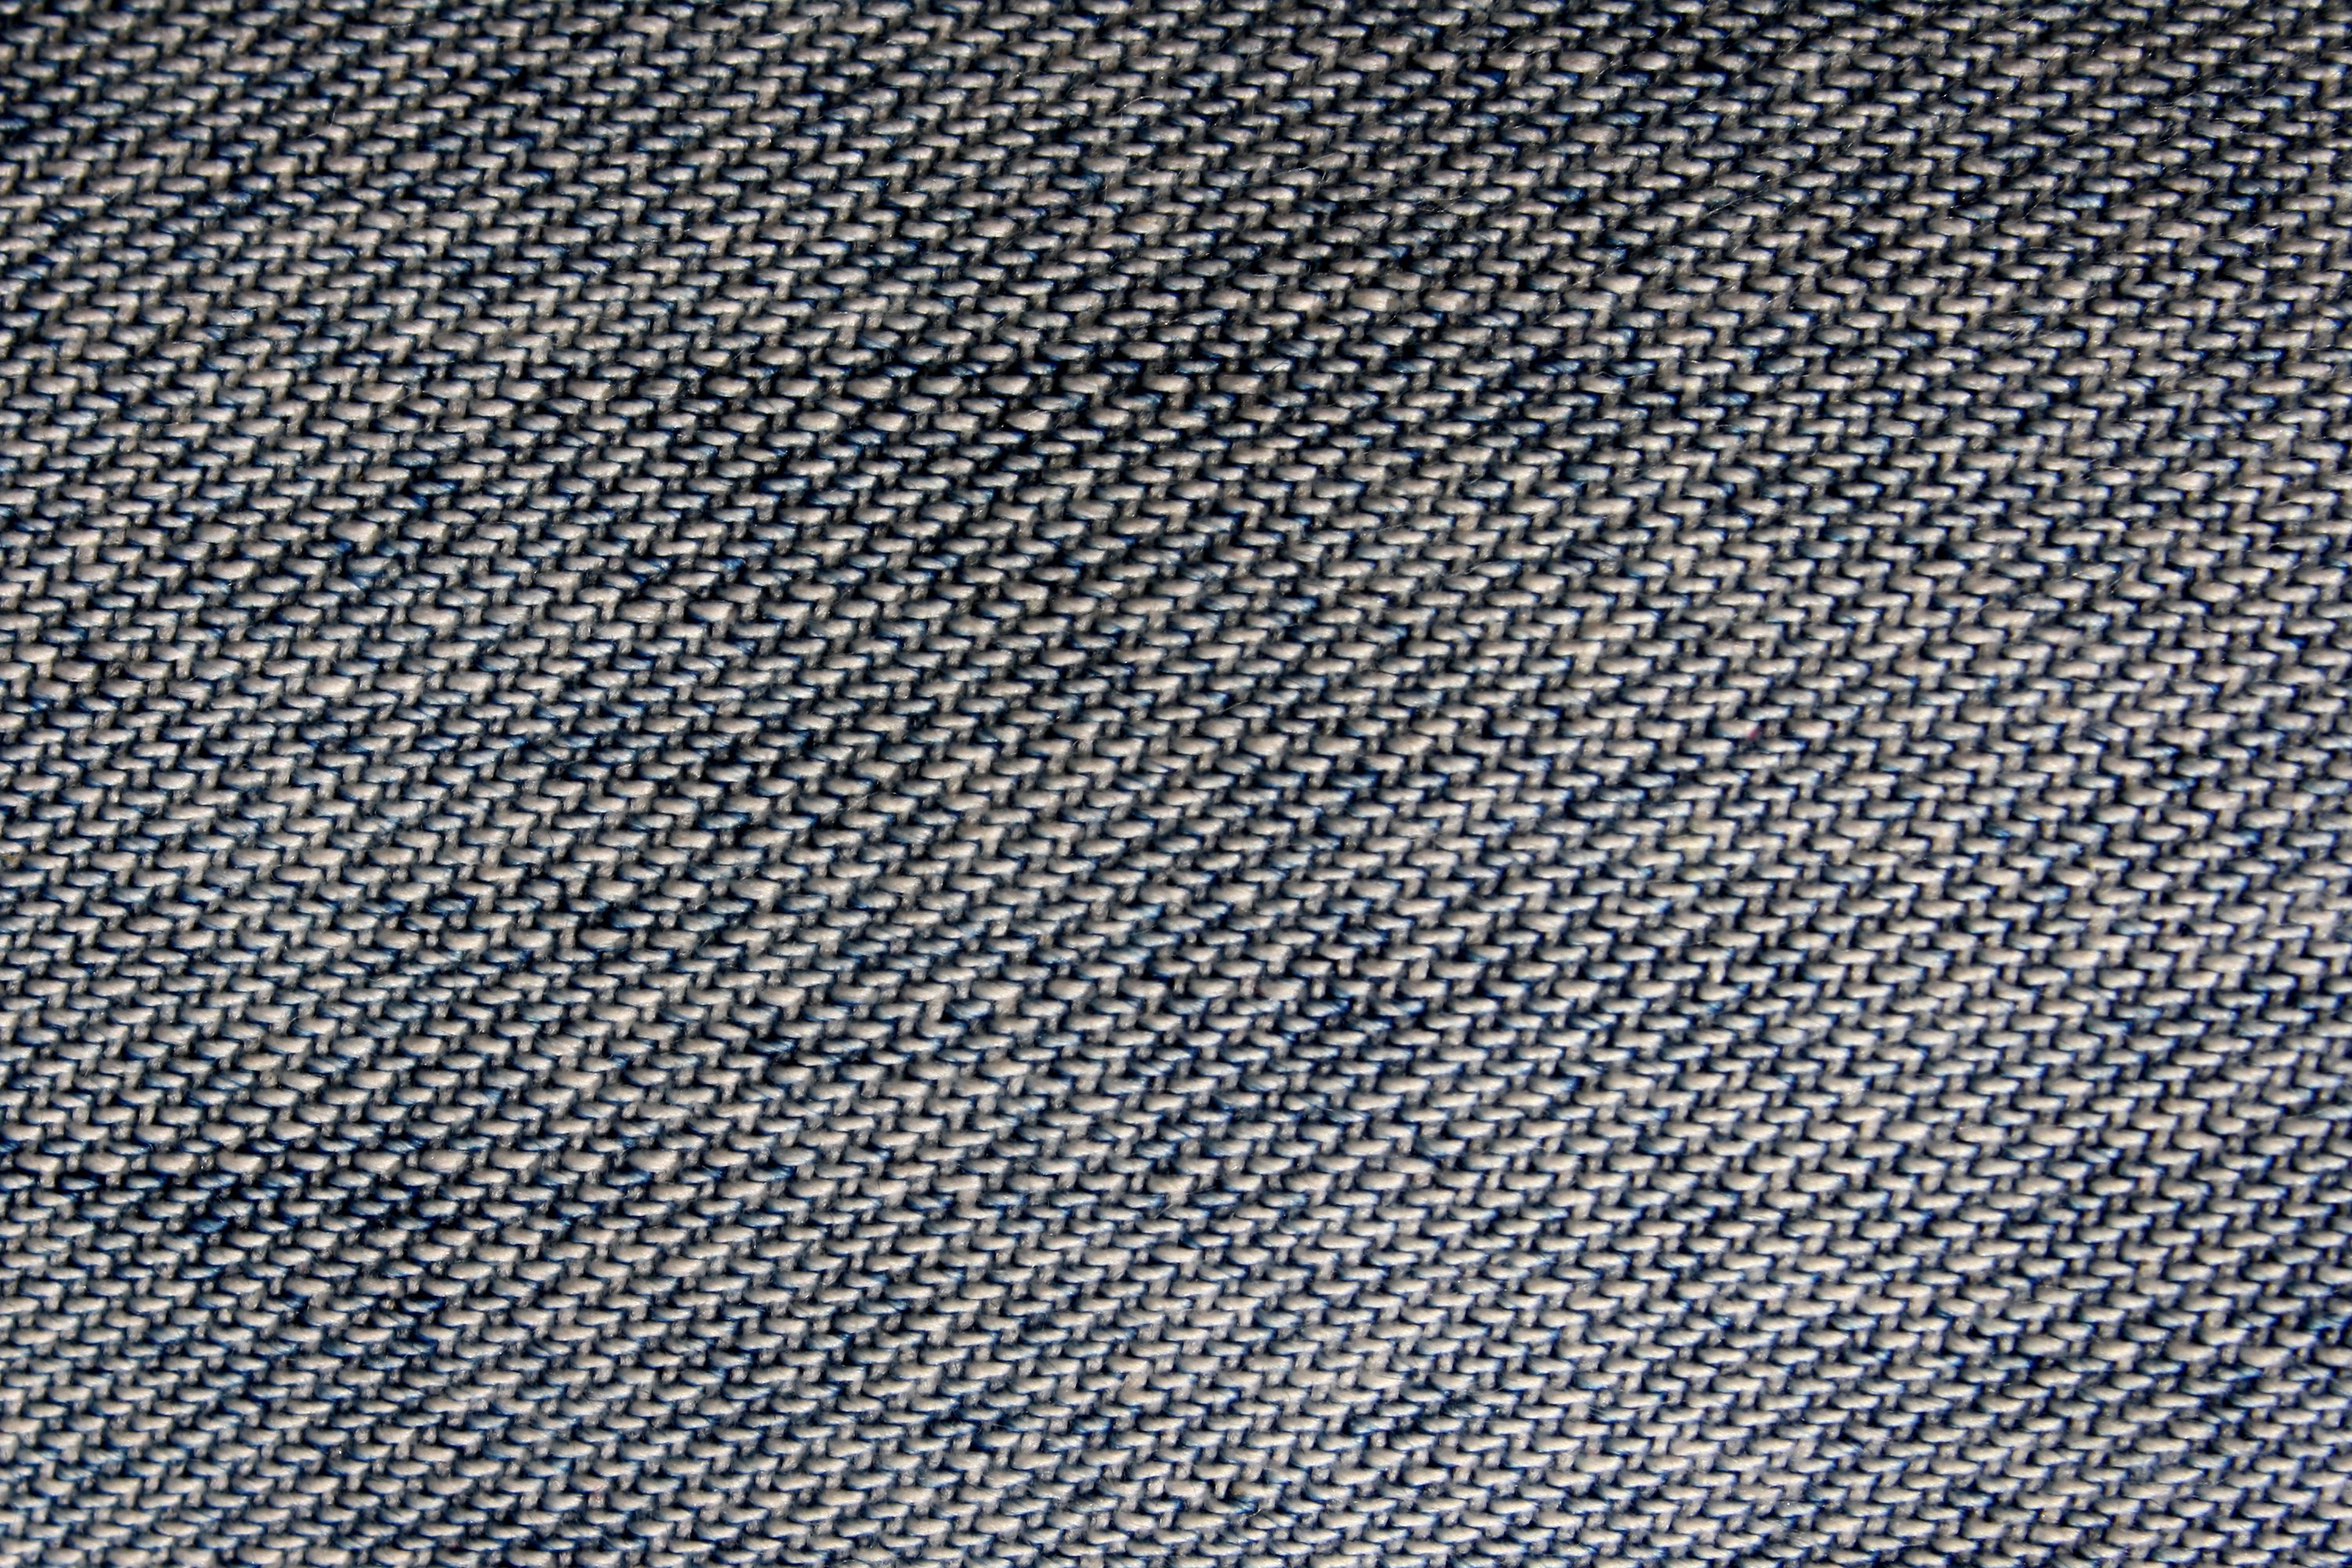 Light Blue Denim Fabric Closeup Texture High Resolution Photo